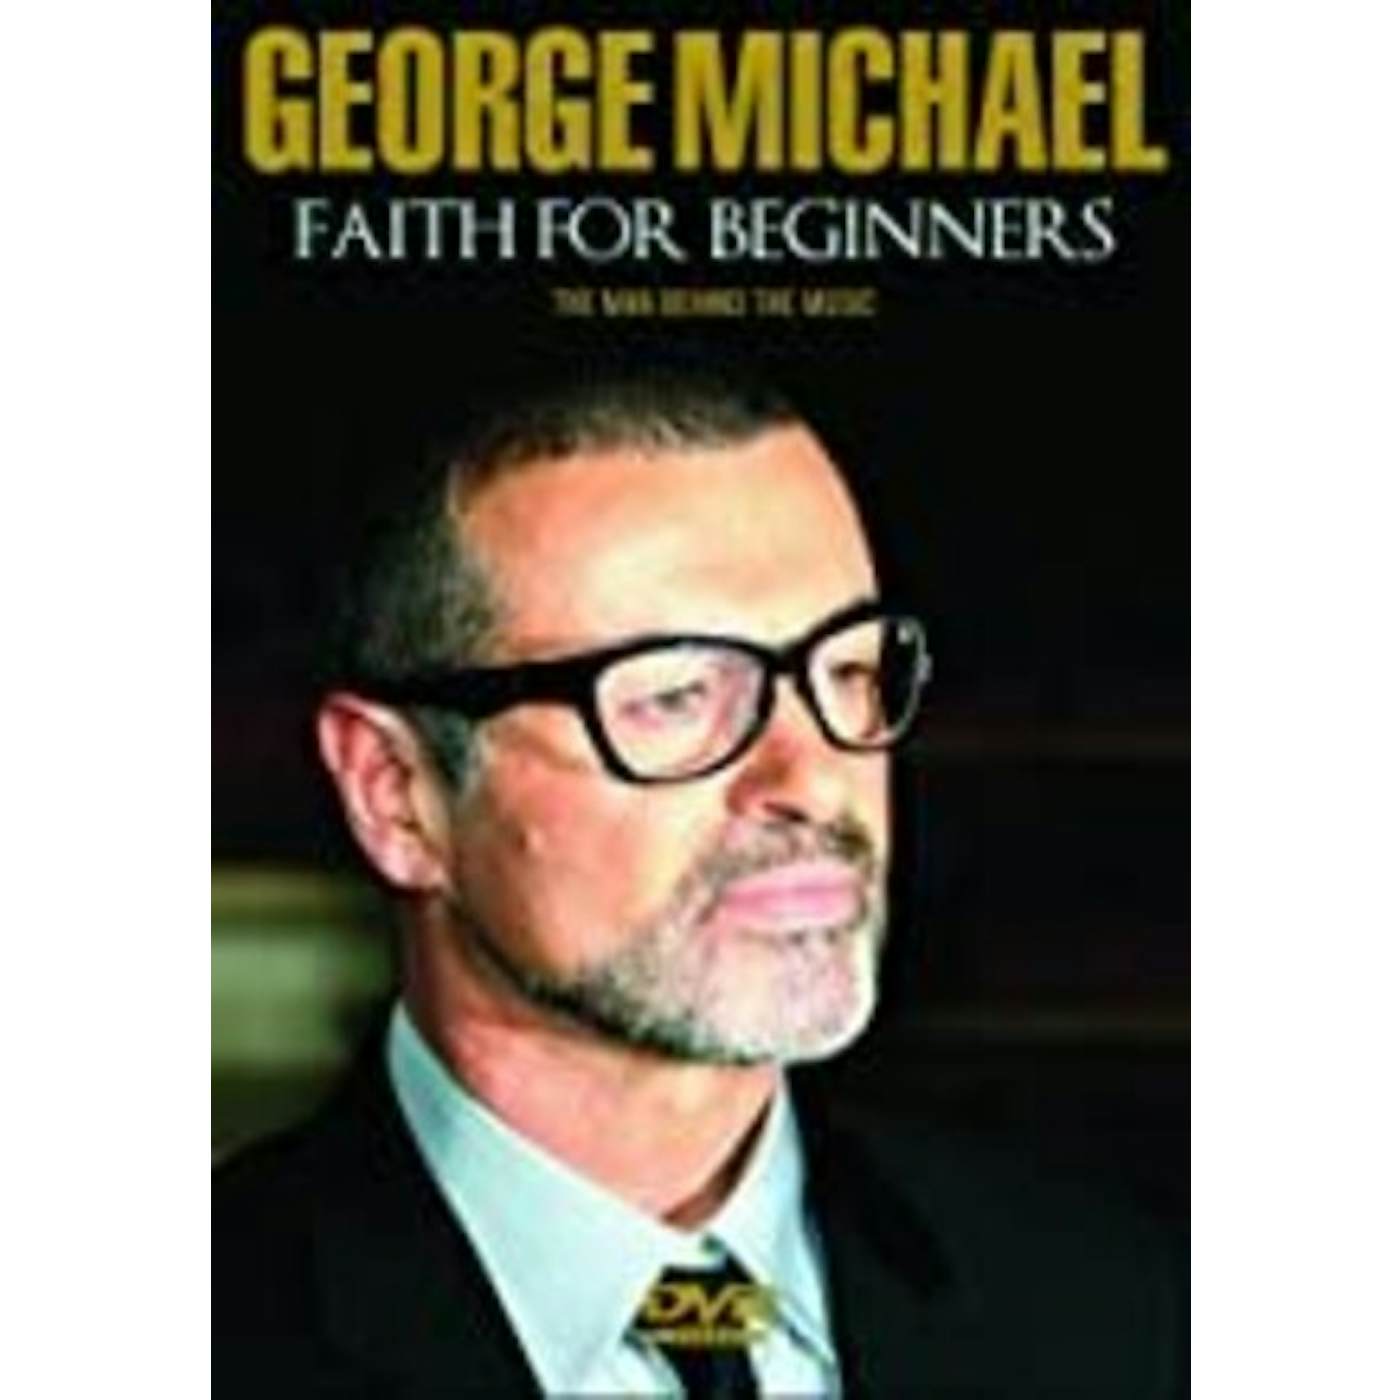 George Michael FAITH FOR BEGINNERS DVD